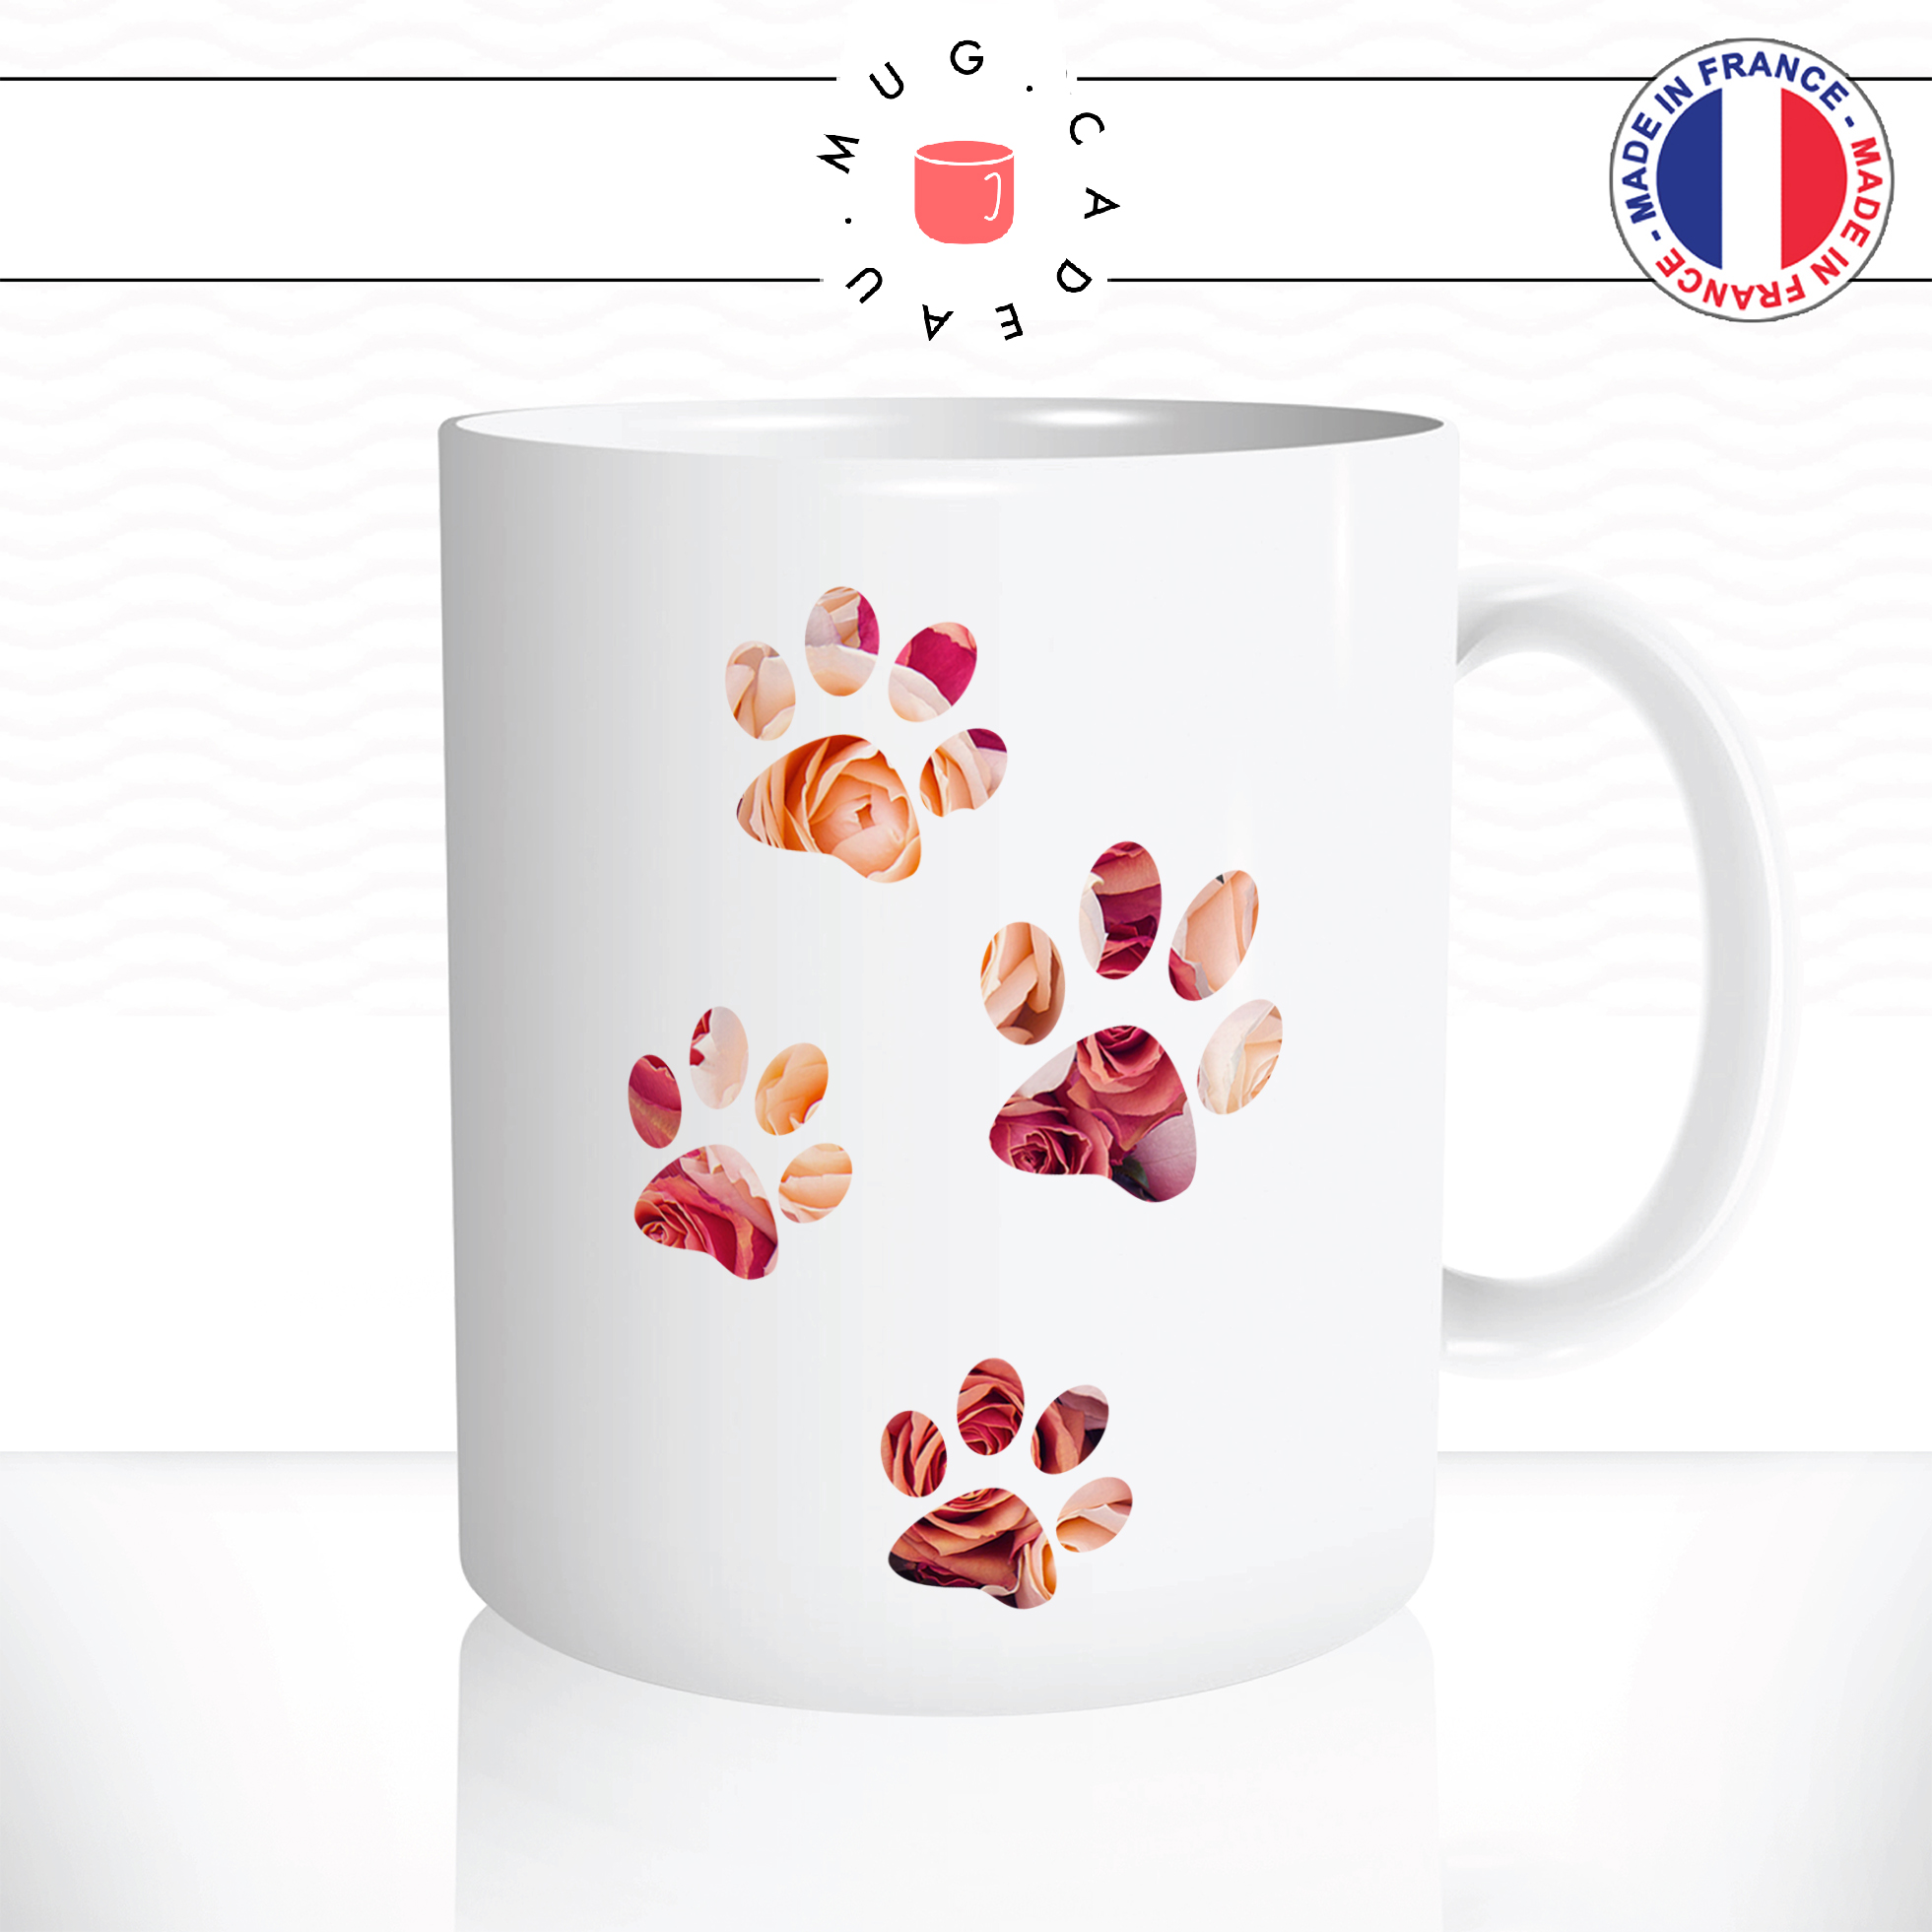 mug-tasse-ref29-chat-pattes-fleurs-cafe-the-mugs-tasses-personnalise-anse-droite